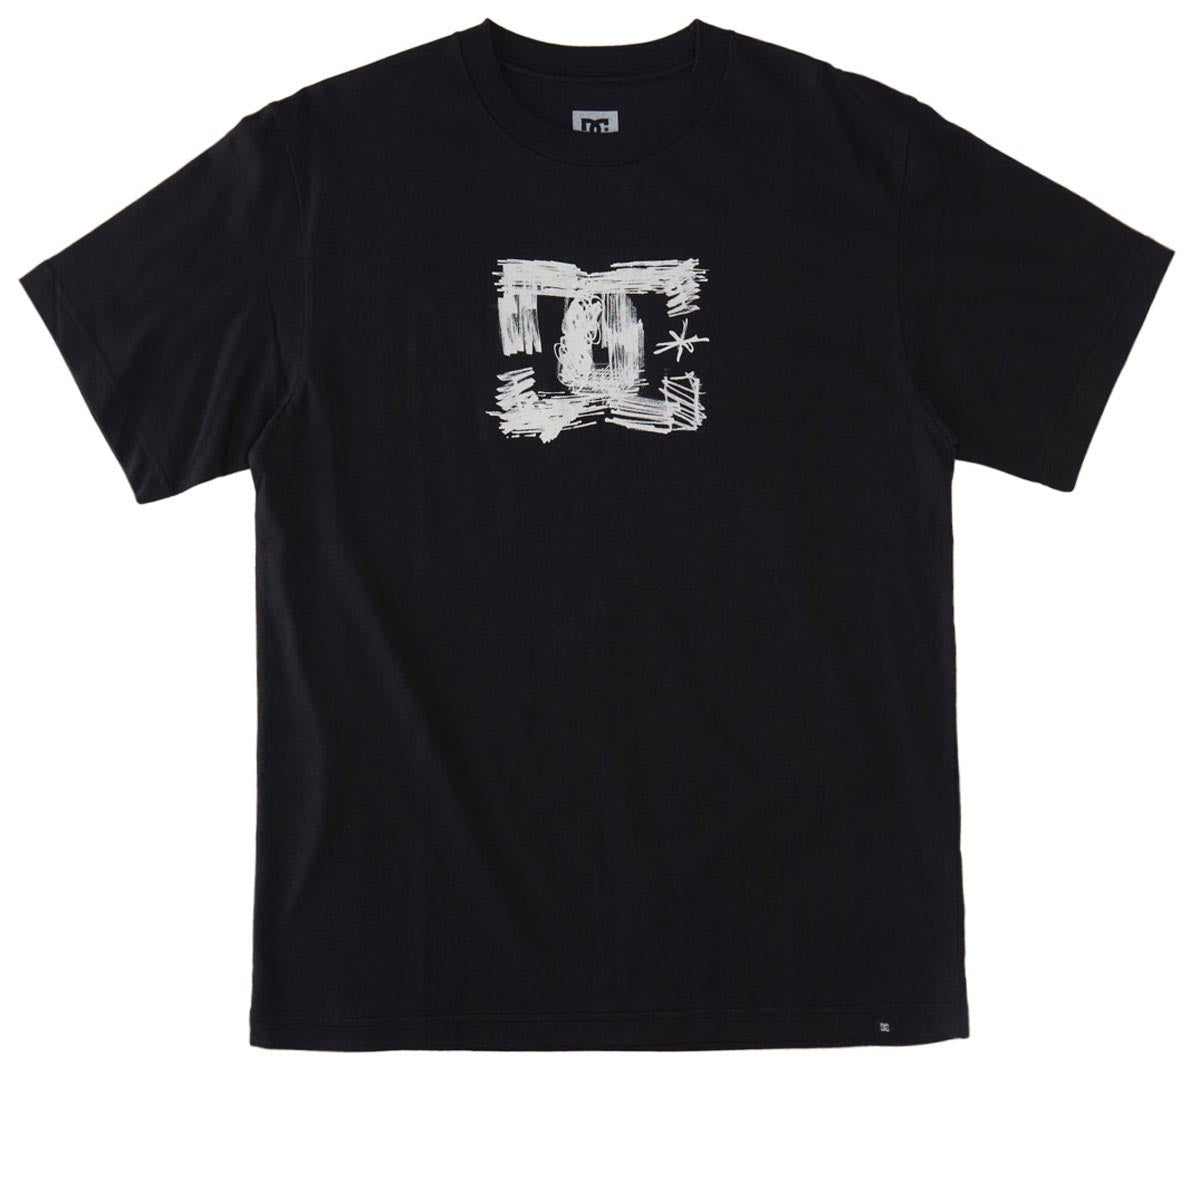 DC Sketchy T-Shirt - Black image 1